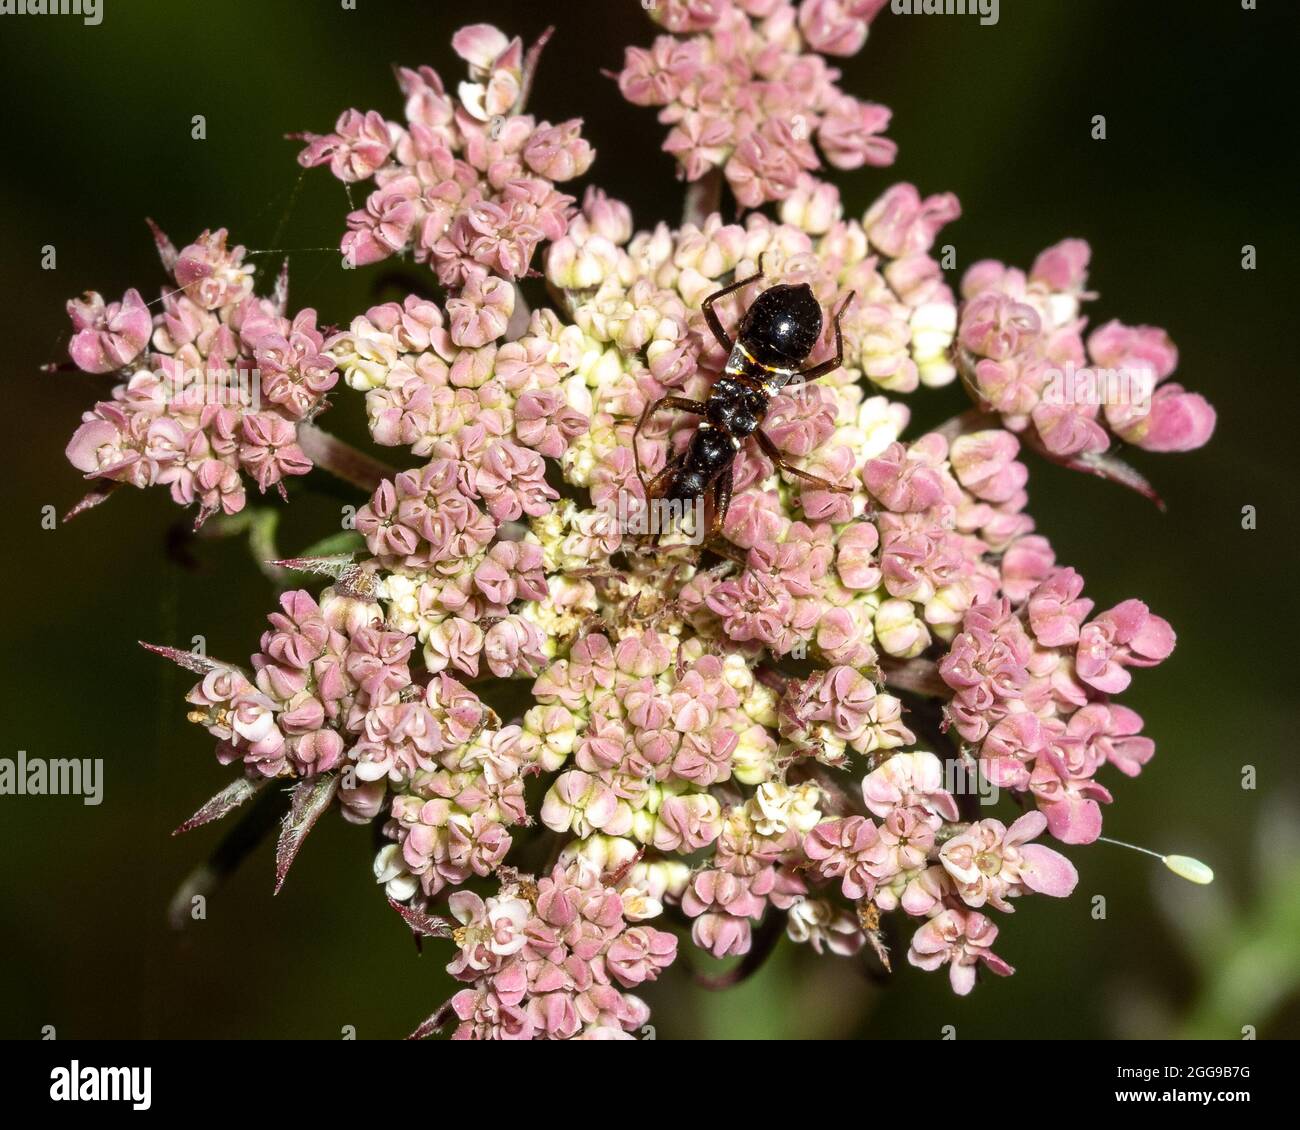 Sawfly species on pink flowers Stock Photo